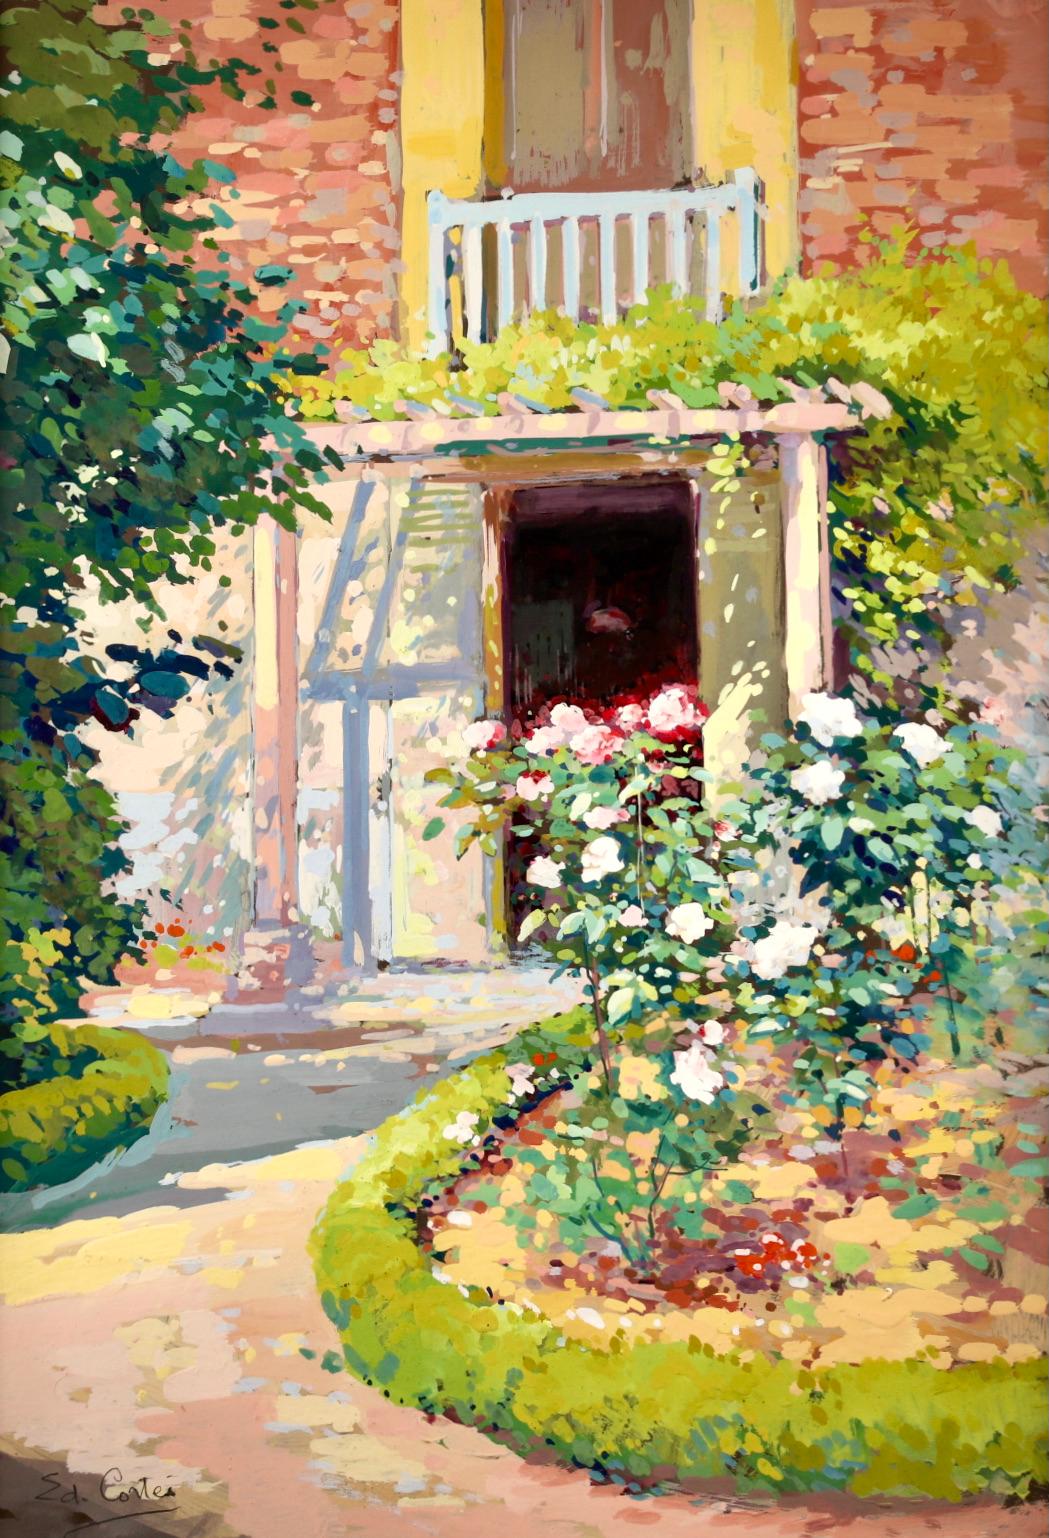 Flower Garden - French Impressionist Gouache, Landscape by Edouard Cortes